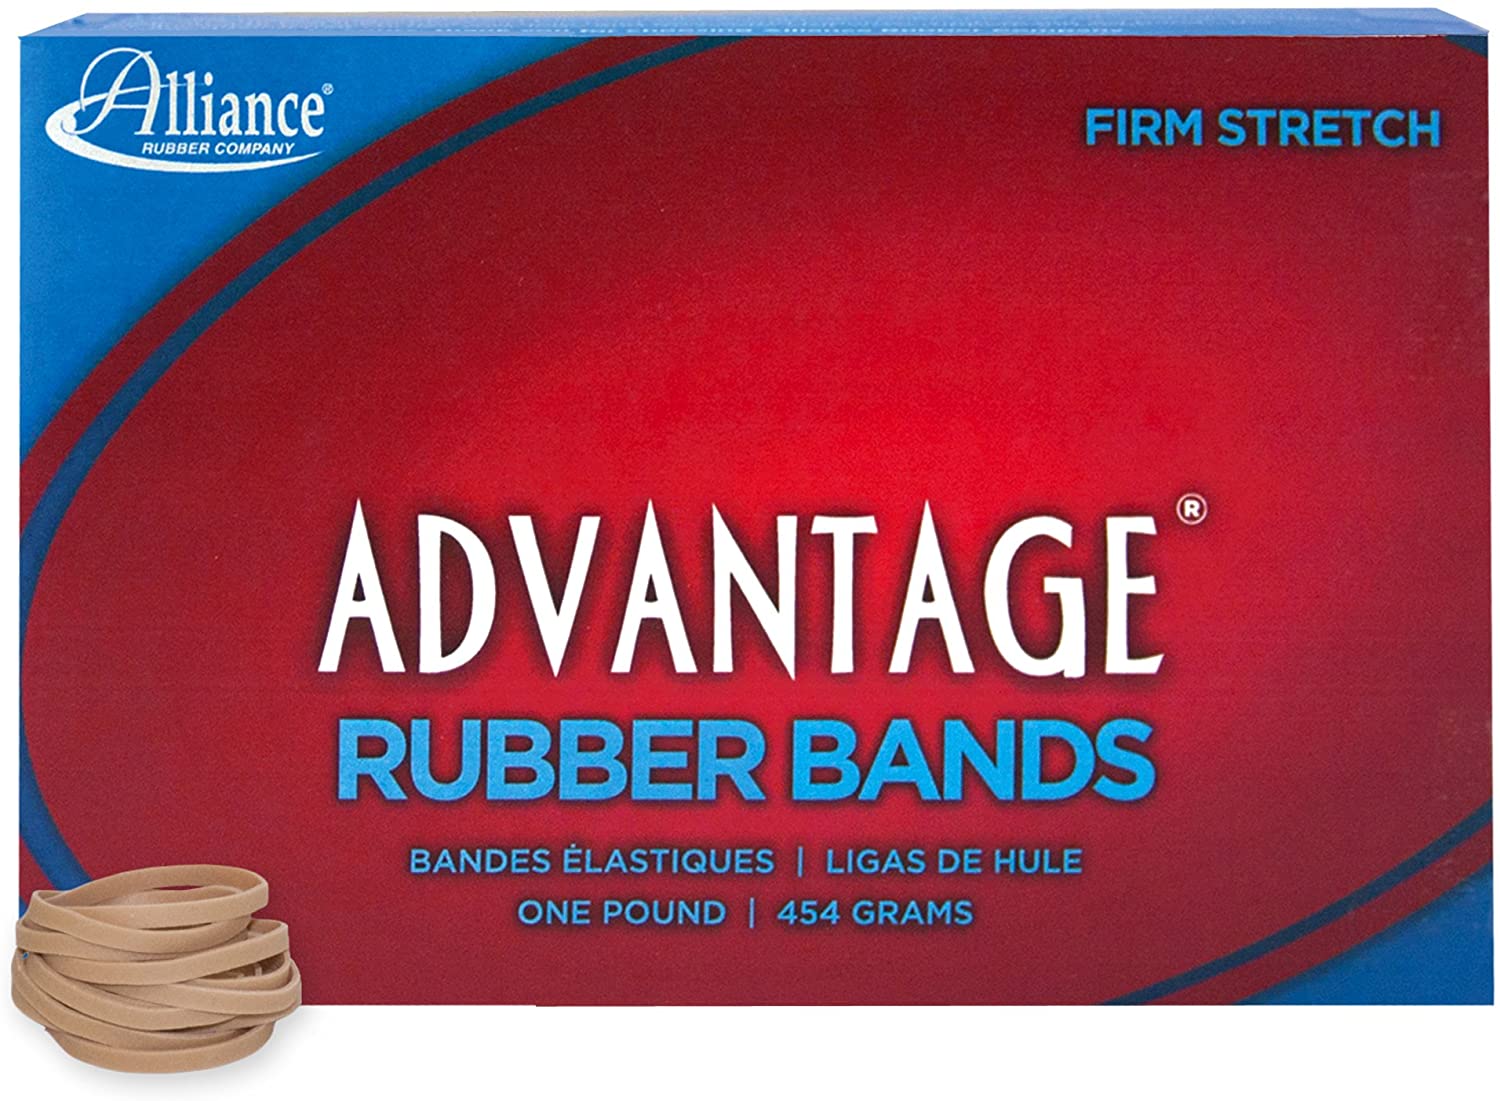 ''Alliance RUBBER 26305 Advantage RUBBER BANDS Size #30, 1 lb Box Contains Approx. 1150 BANDS (2'''' x 